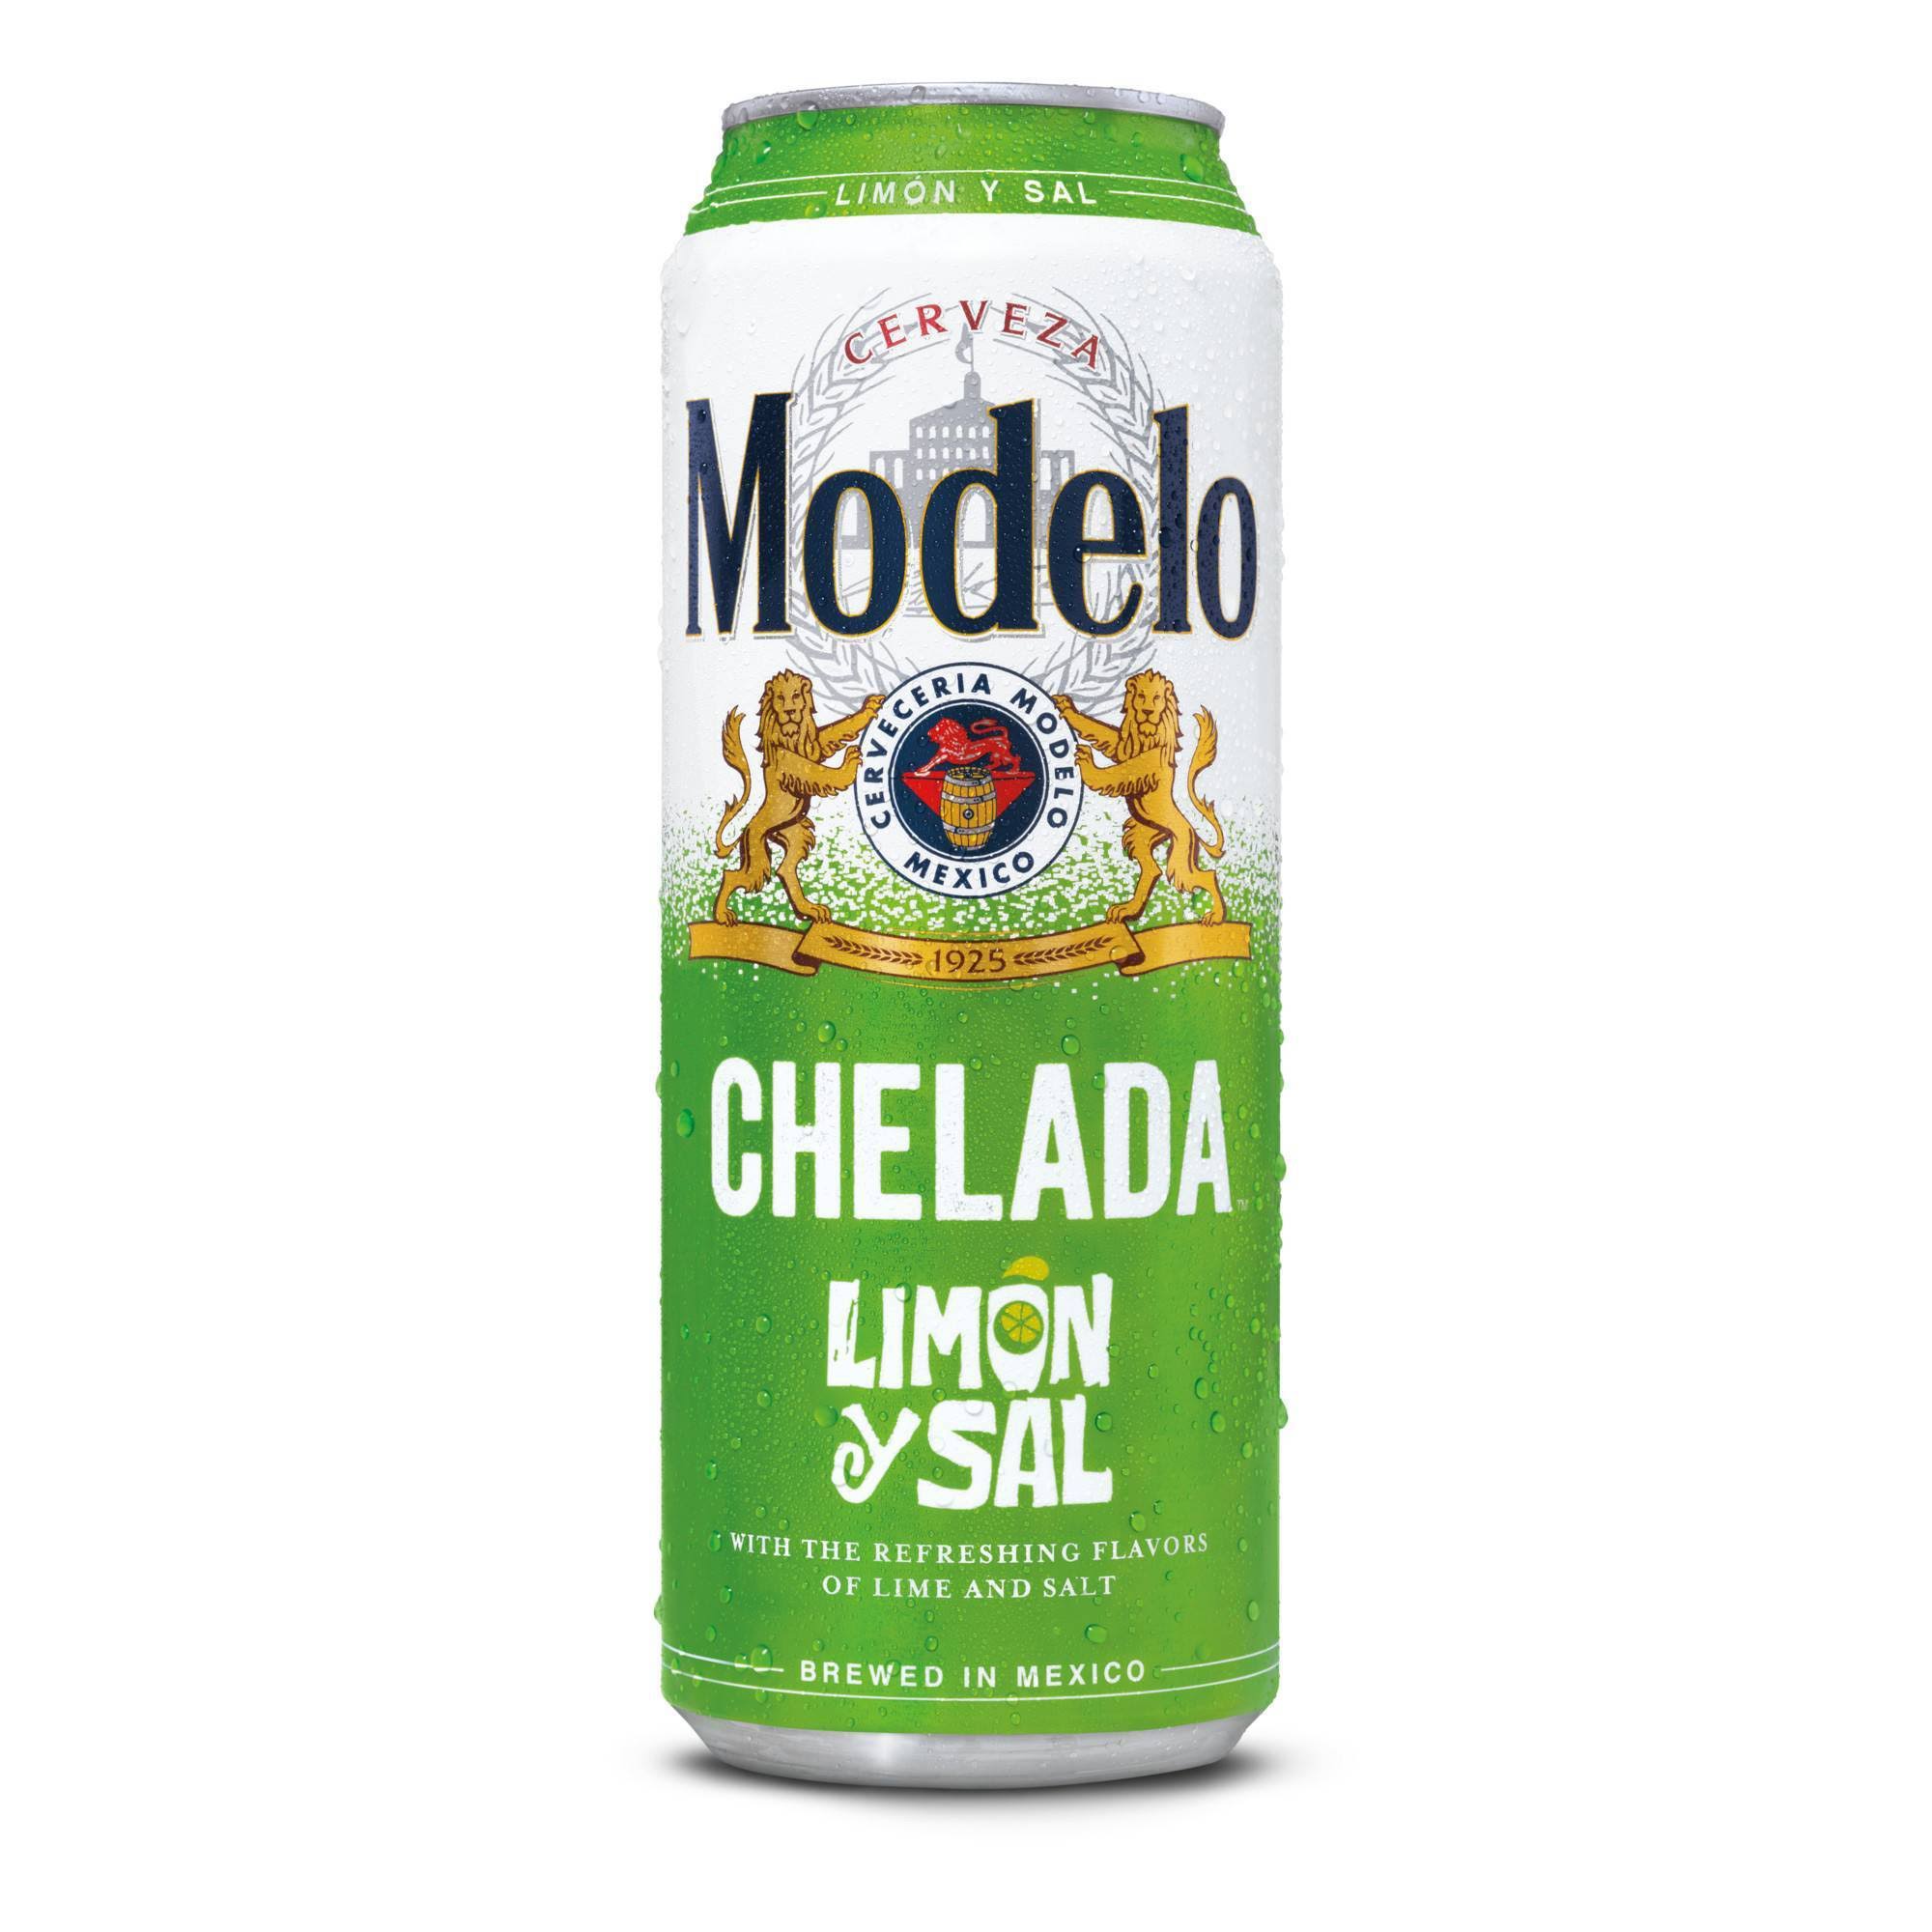 Modelo Beer, Limon Y Sal, Chelada - 24 fl oz